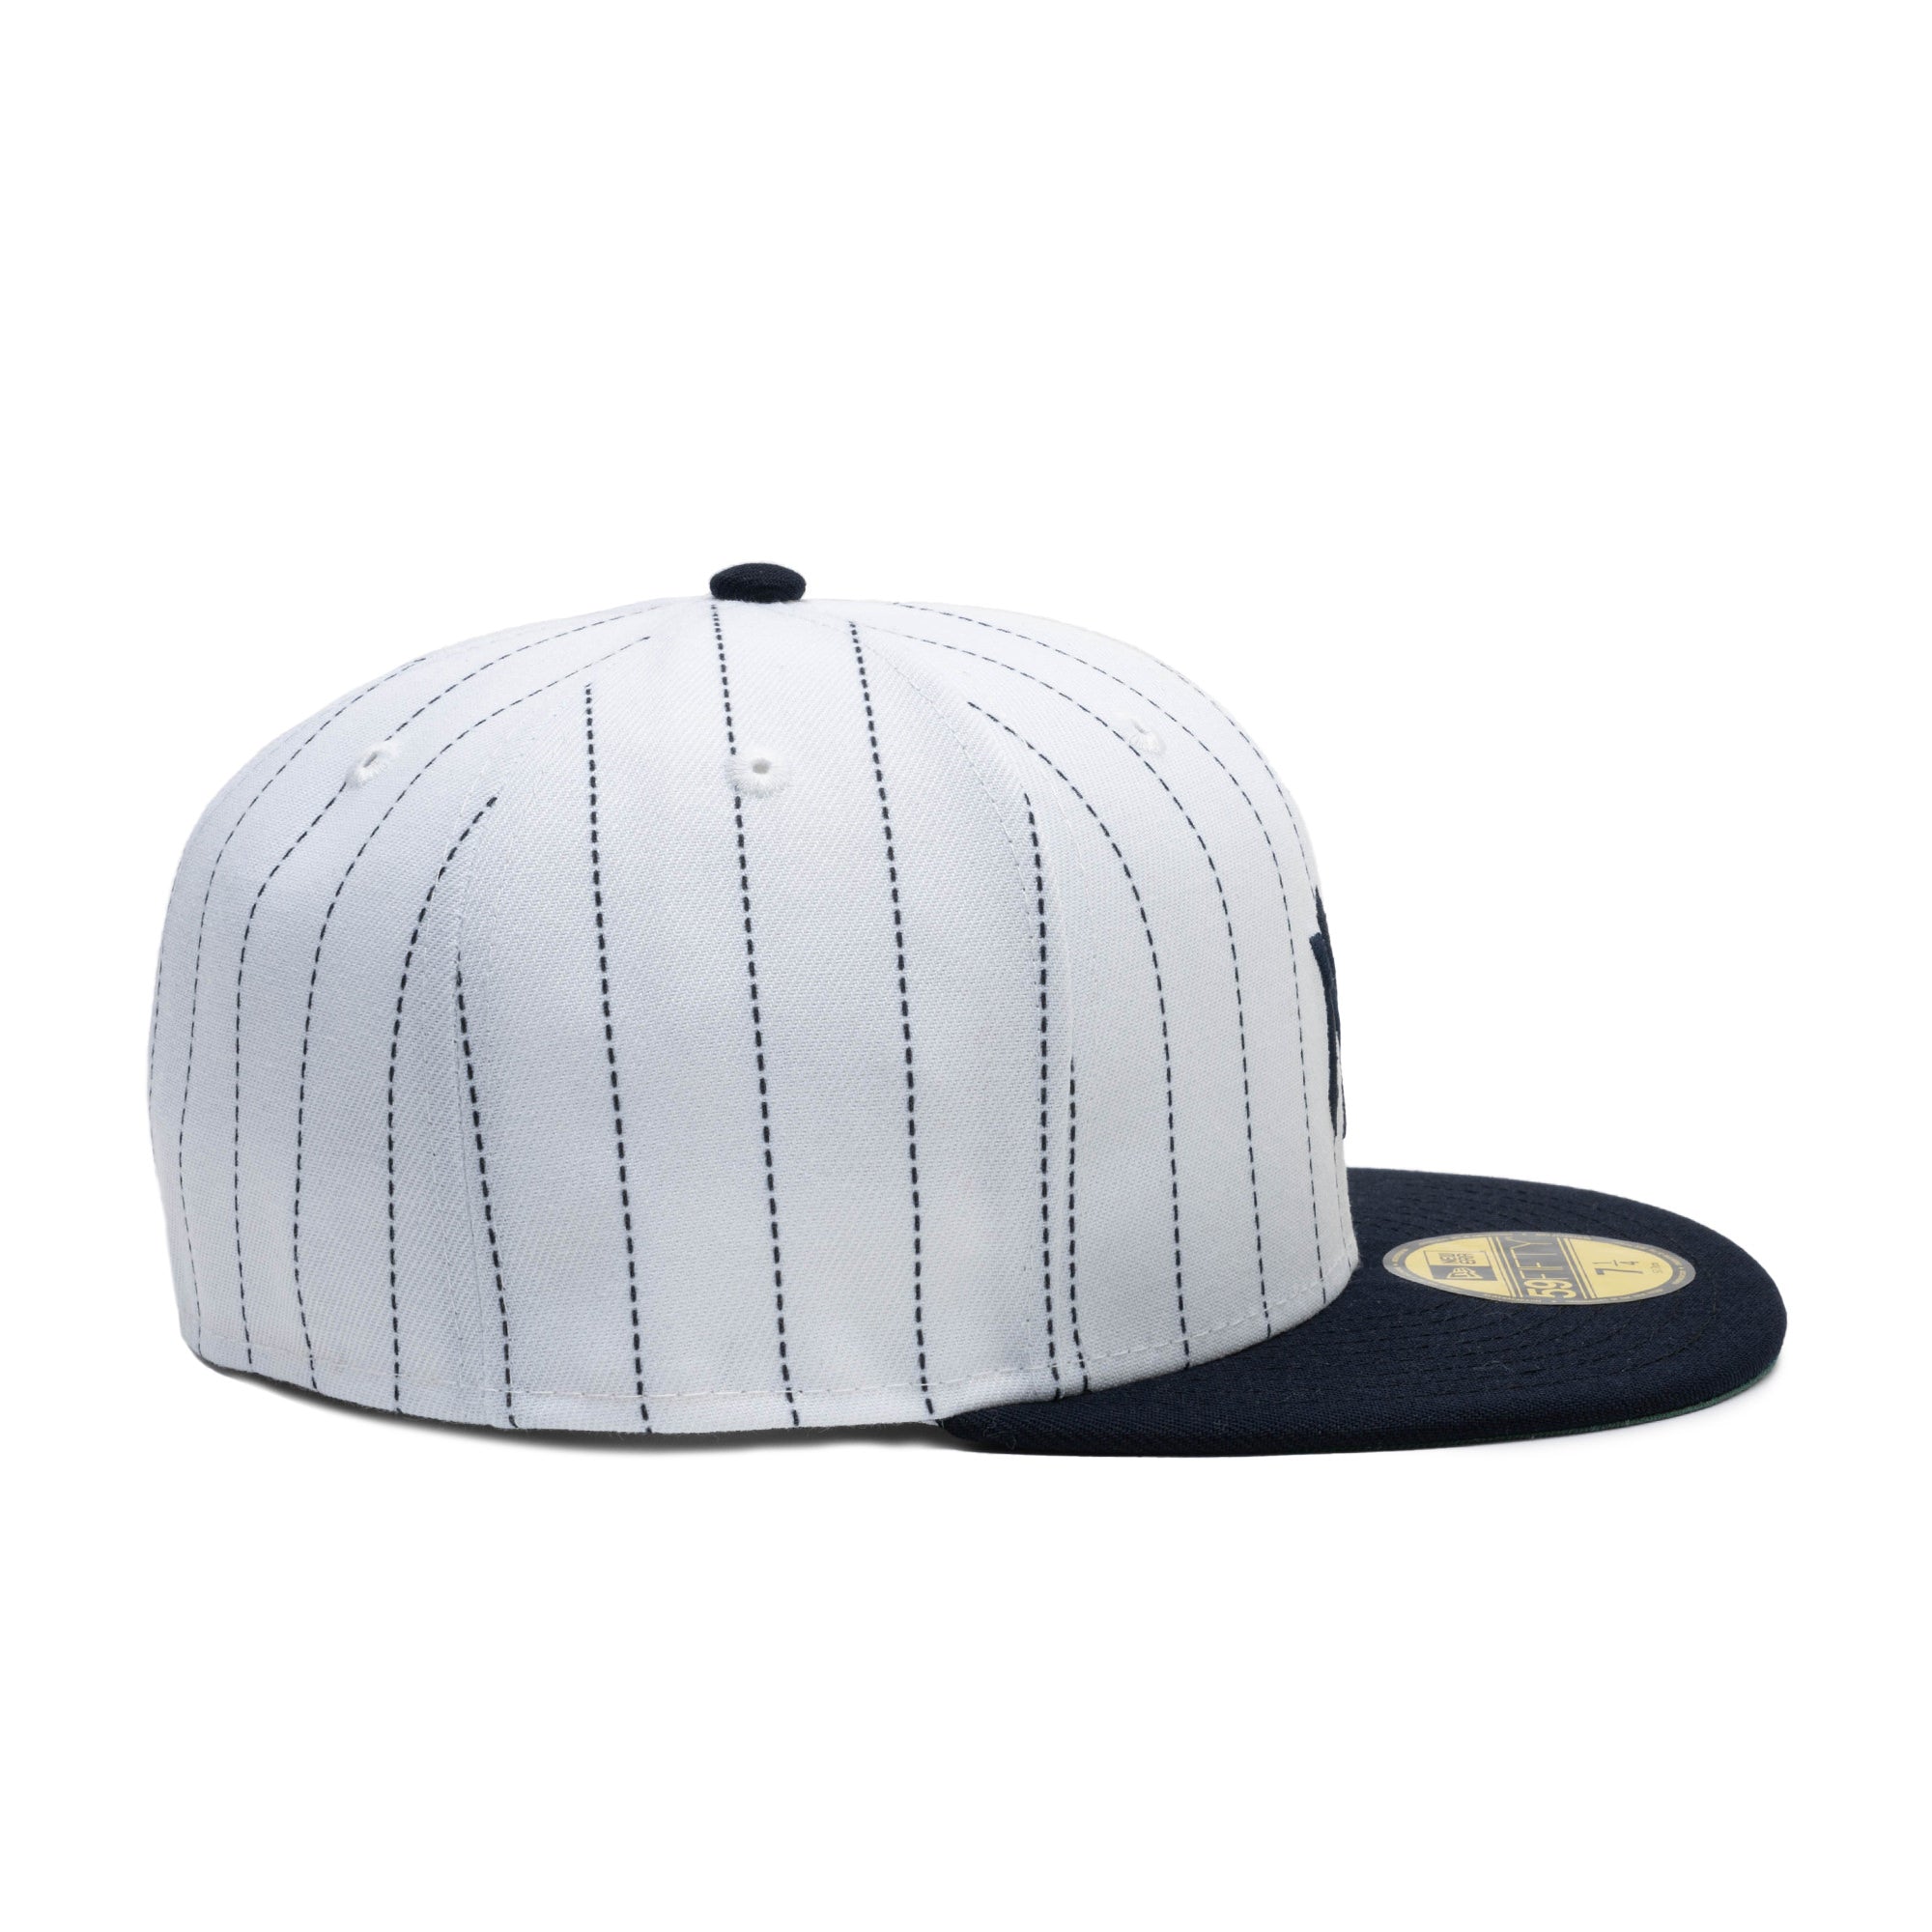 NY Yankees 1912 Stripe White